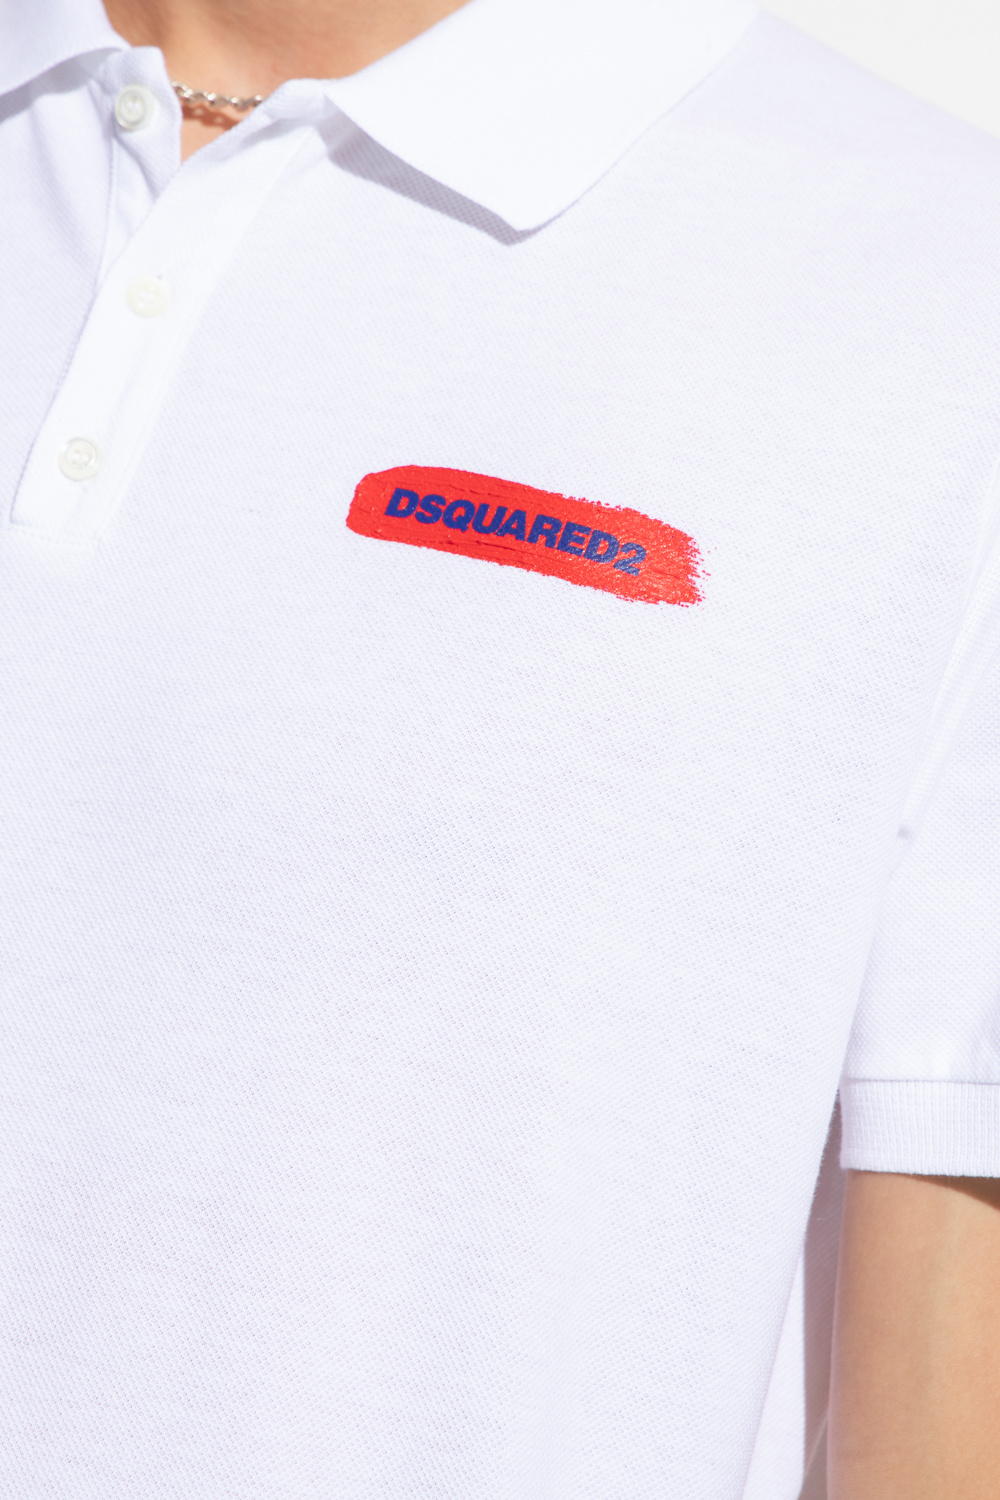 zweep dutje omzeilen Dsquared2 Polo shirt with logo | Men's Clothing | Vitkac